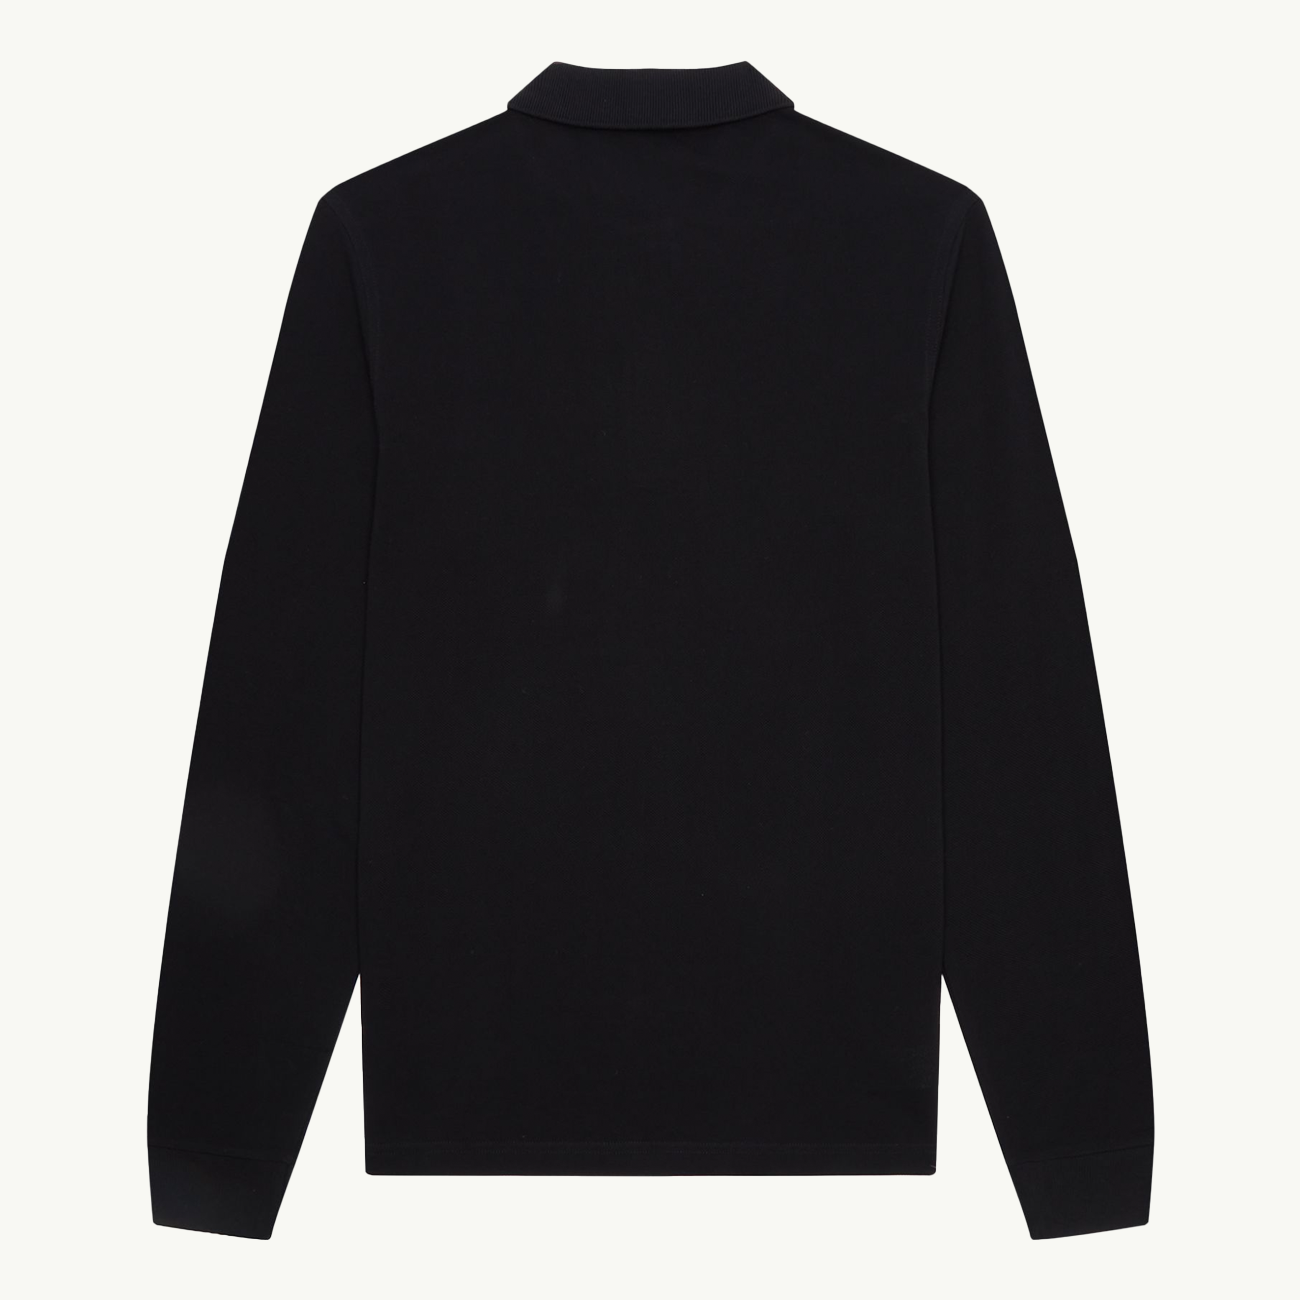 LS Plain Fred Perry Shirt - Black/Chrome